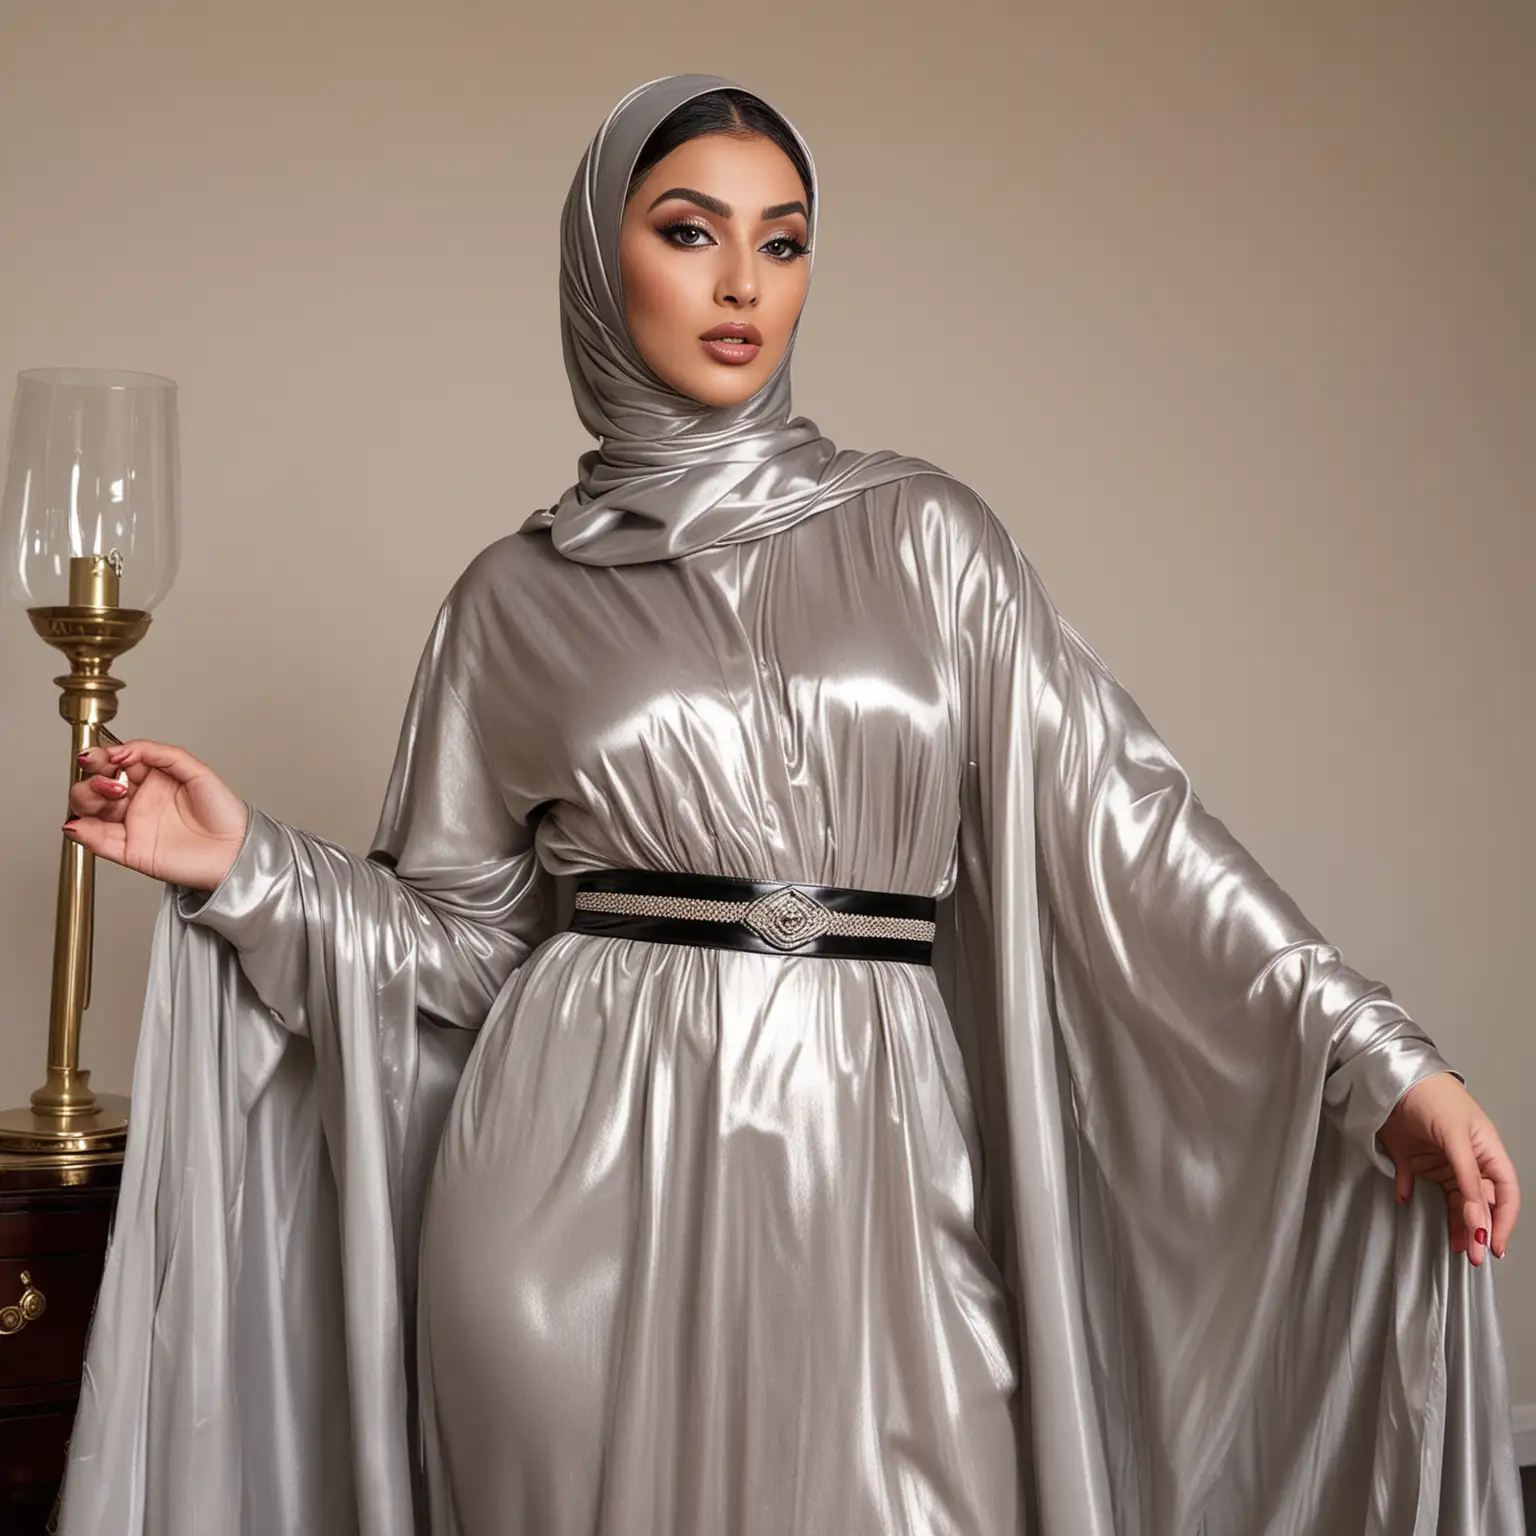 Niqabi muslimah in heavy makeup wearing a shiny metallic silk chiffon hijab and kaftan. The metallic niqab’s loose, drapey fabric hides her face and she’s wearing 5” Louboutin patent leather heels 